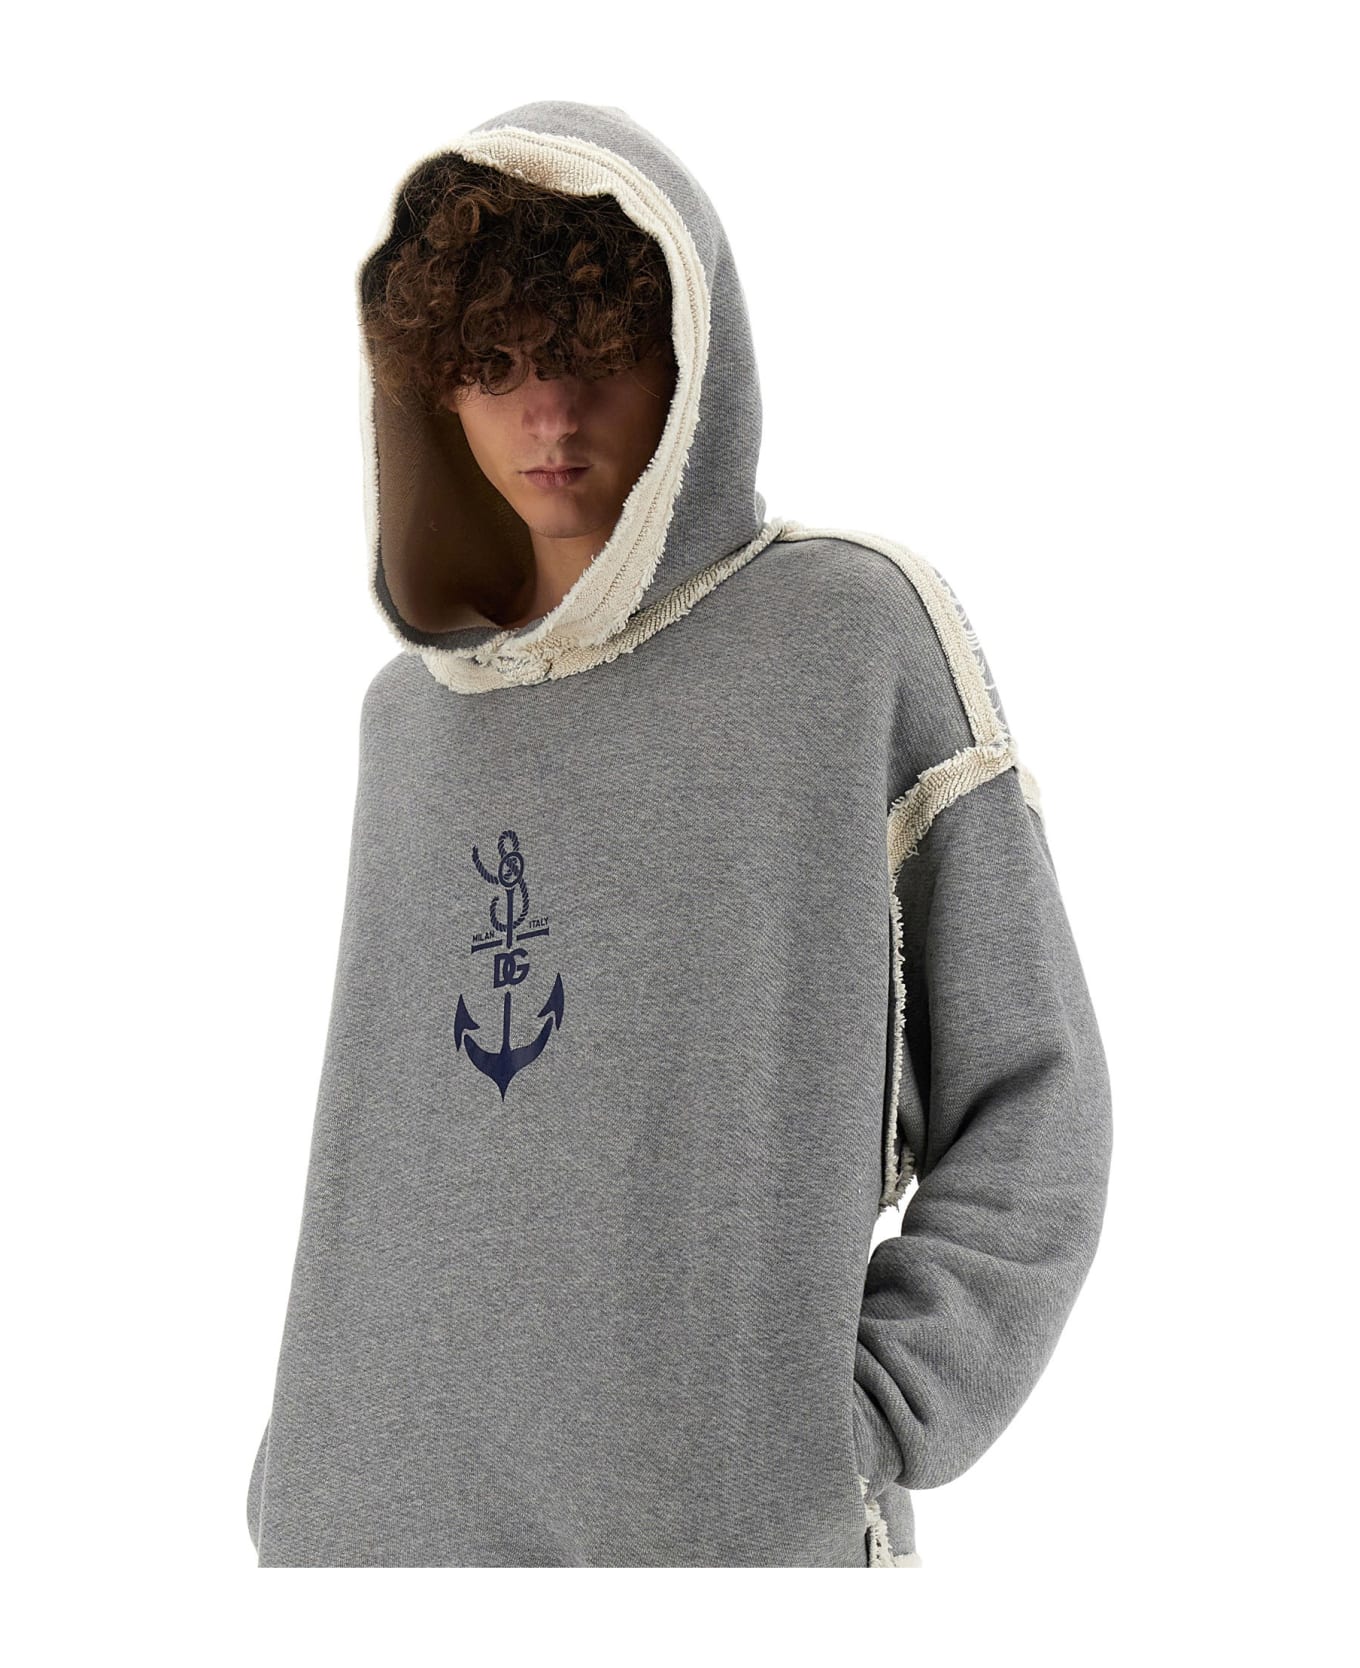 Dolce & Gabbana Sweatshirt With Navy Print - Grey フリース